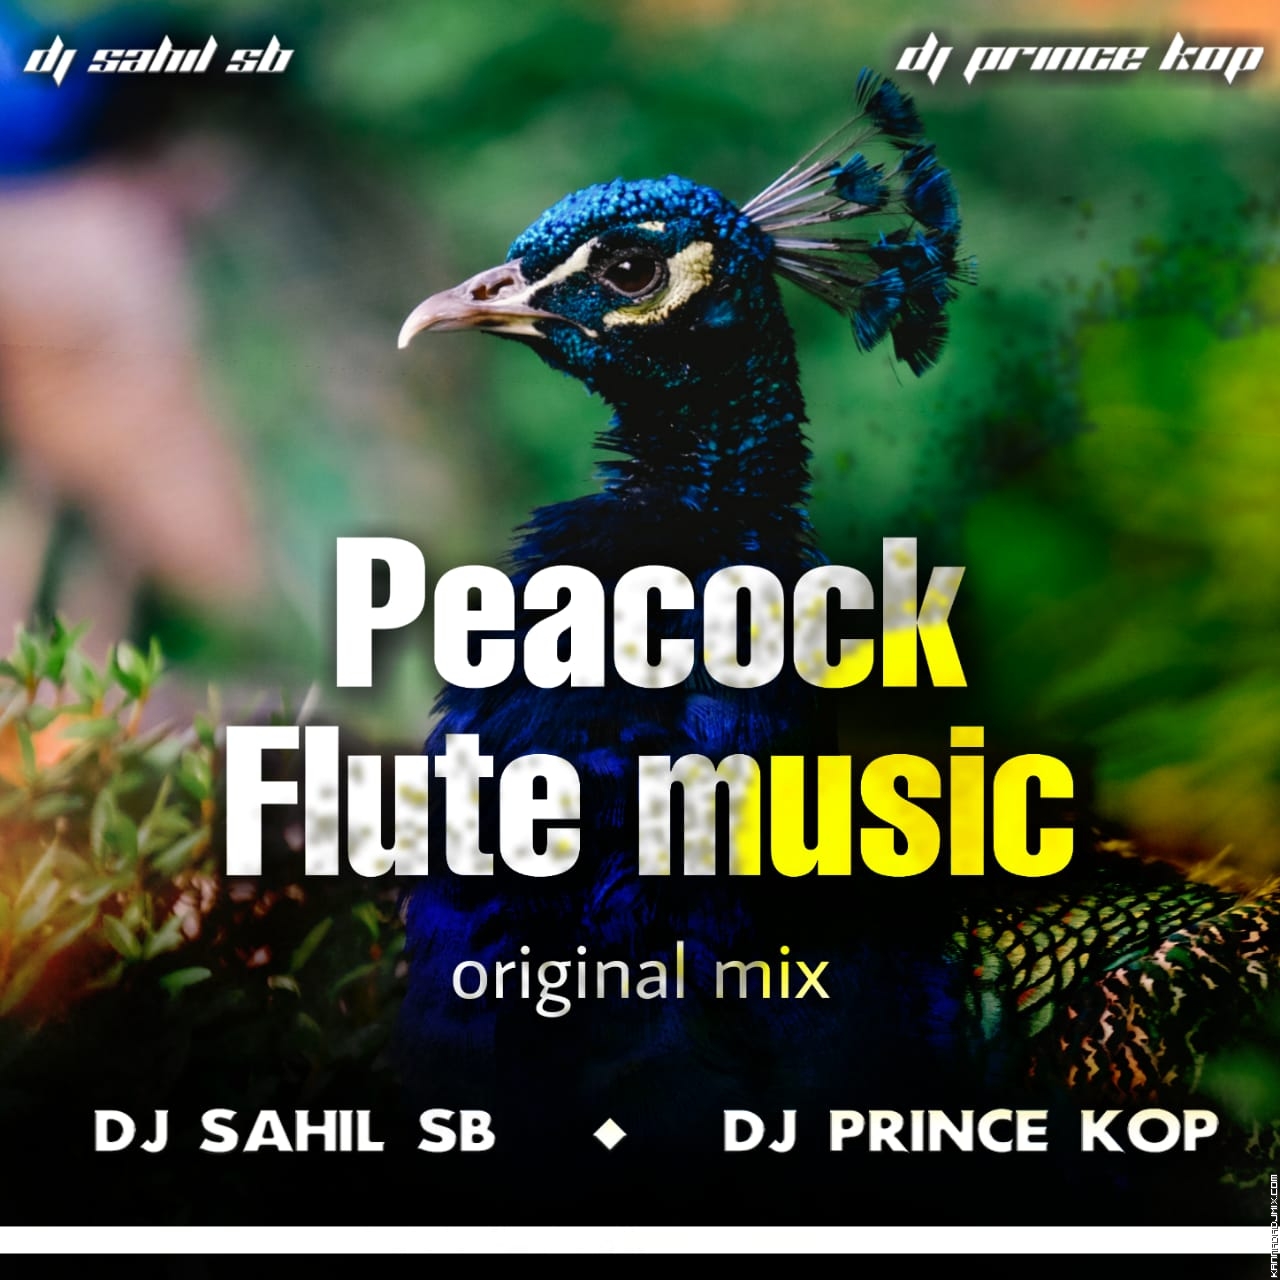 Peacock Flute Music Original Mix - Dj Sahil Sb And Dj Prince Kop.mp3